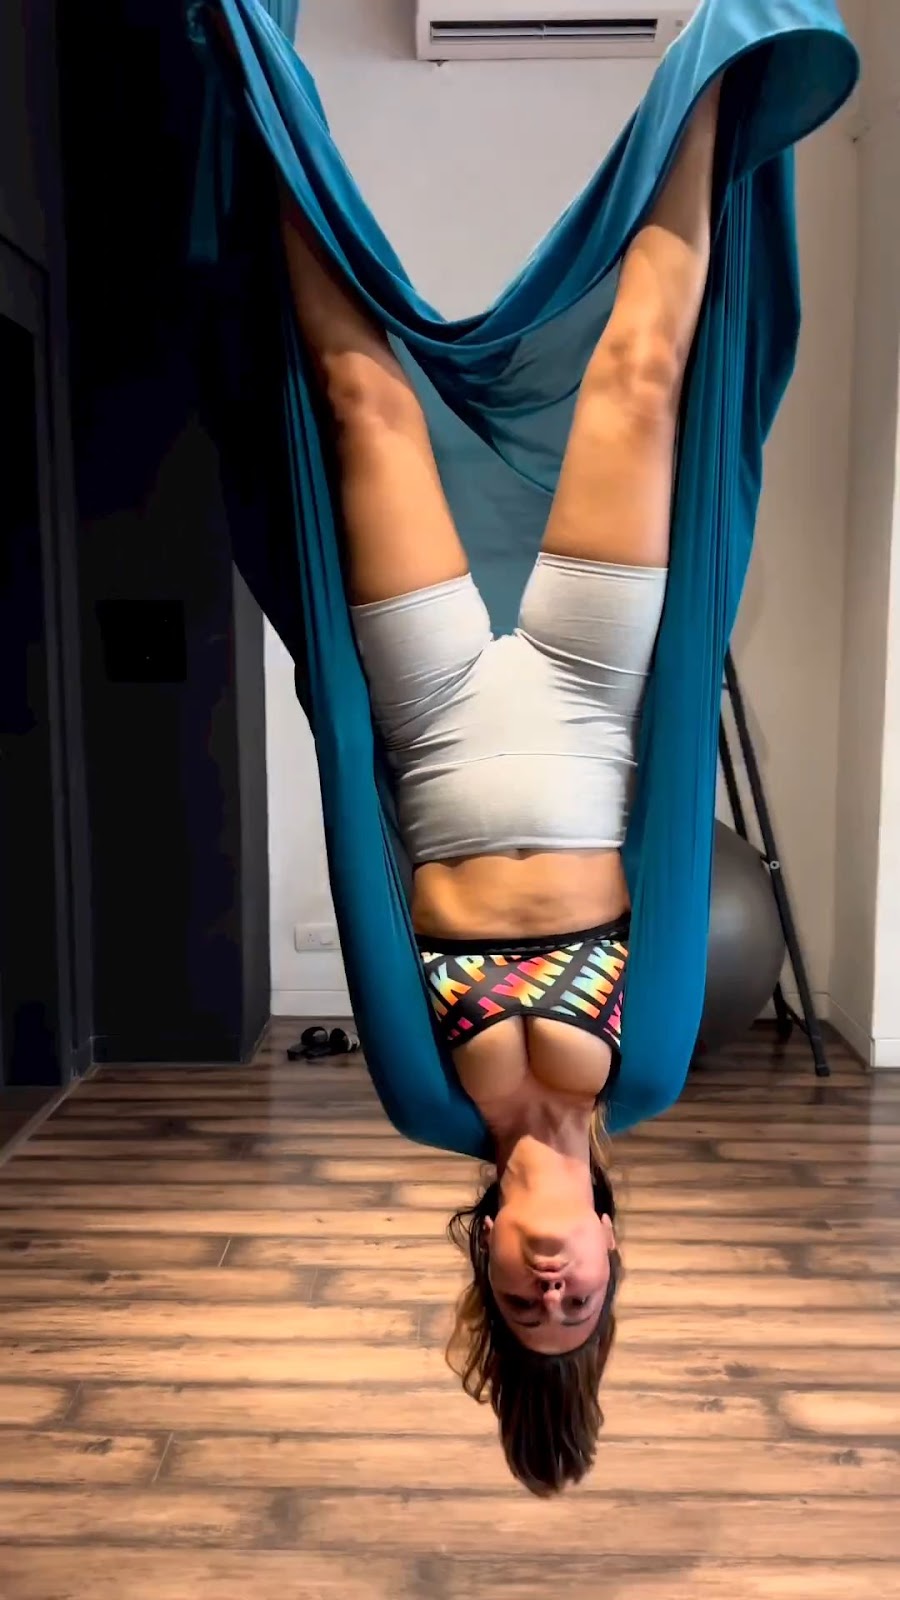 hina khan cleavage ariel yoga hot actress